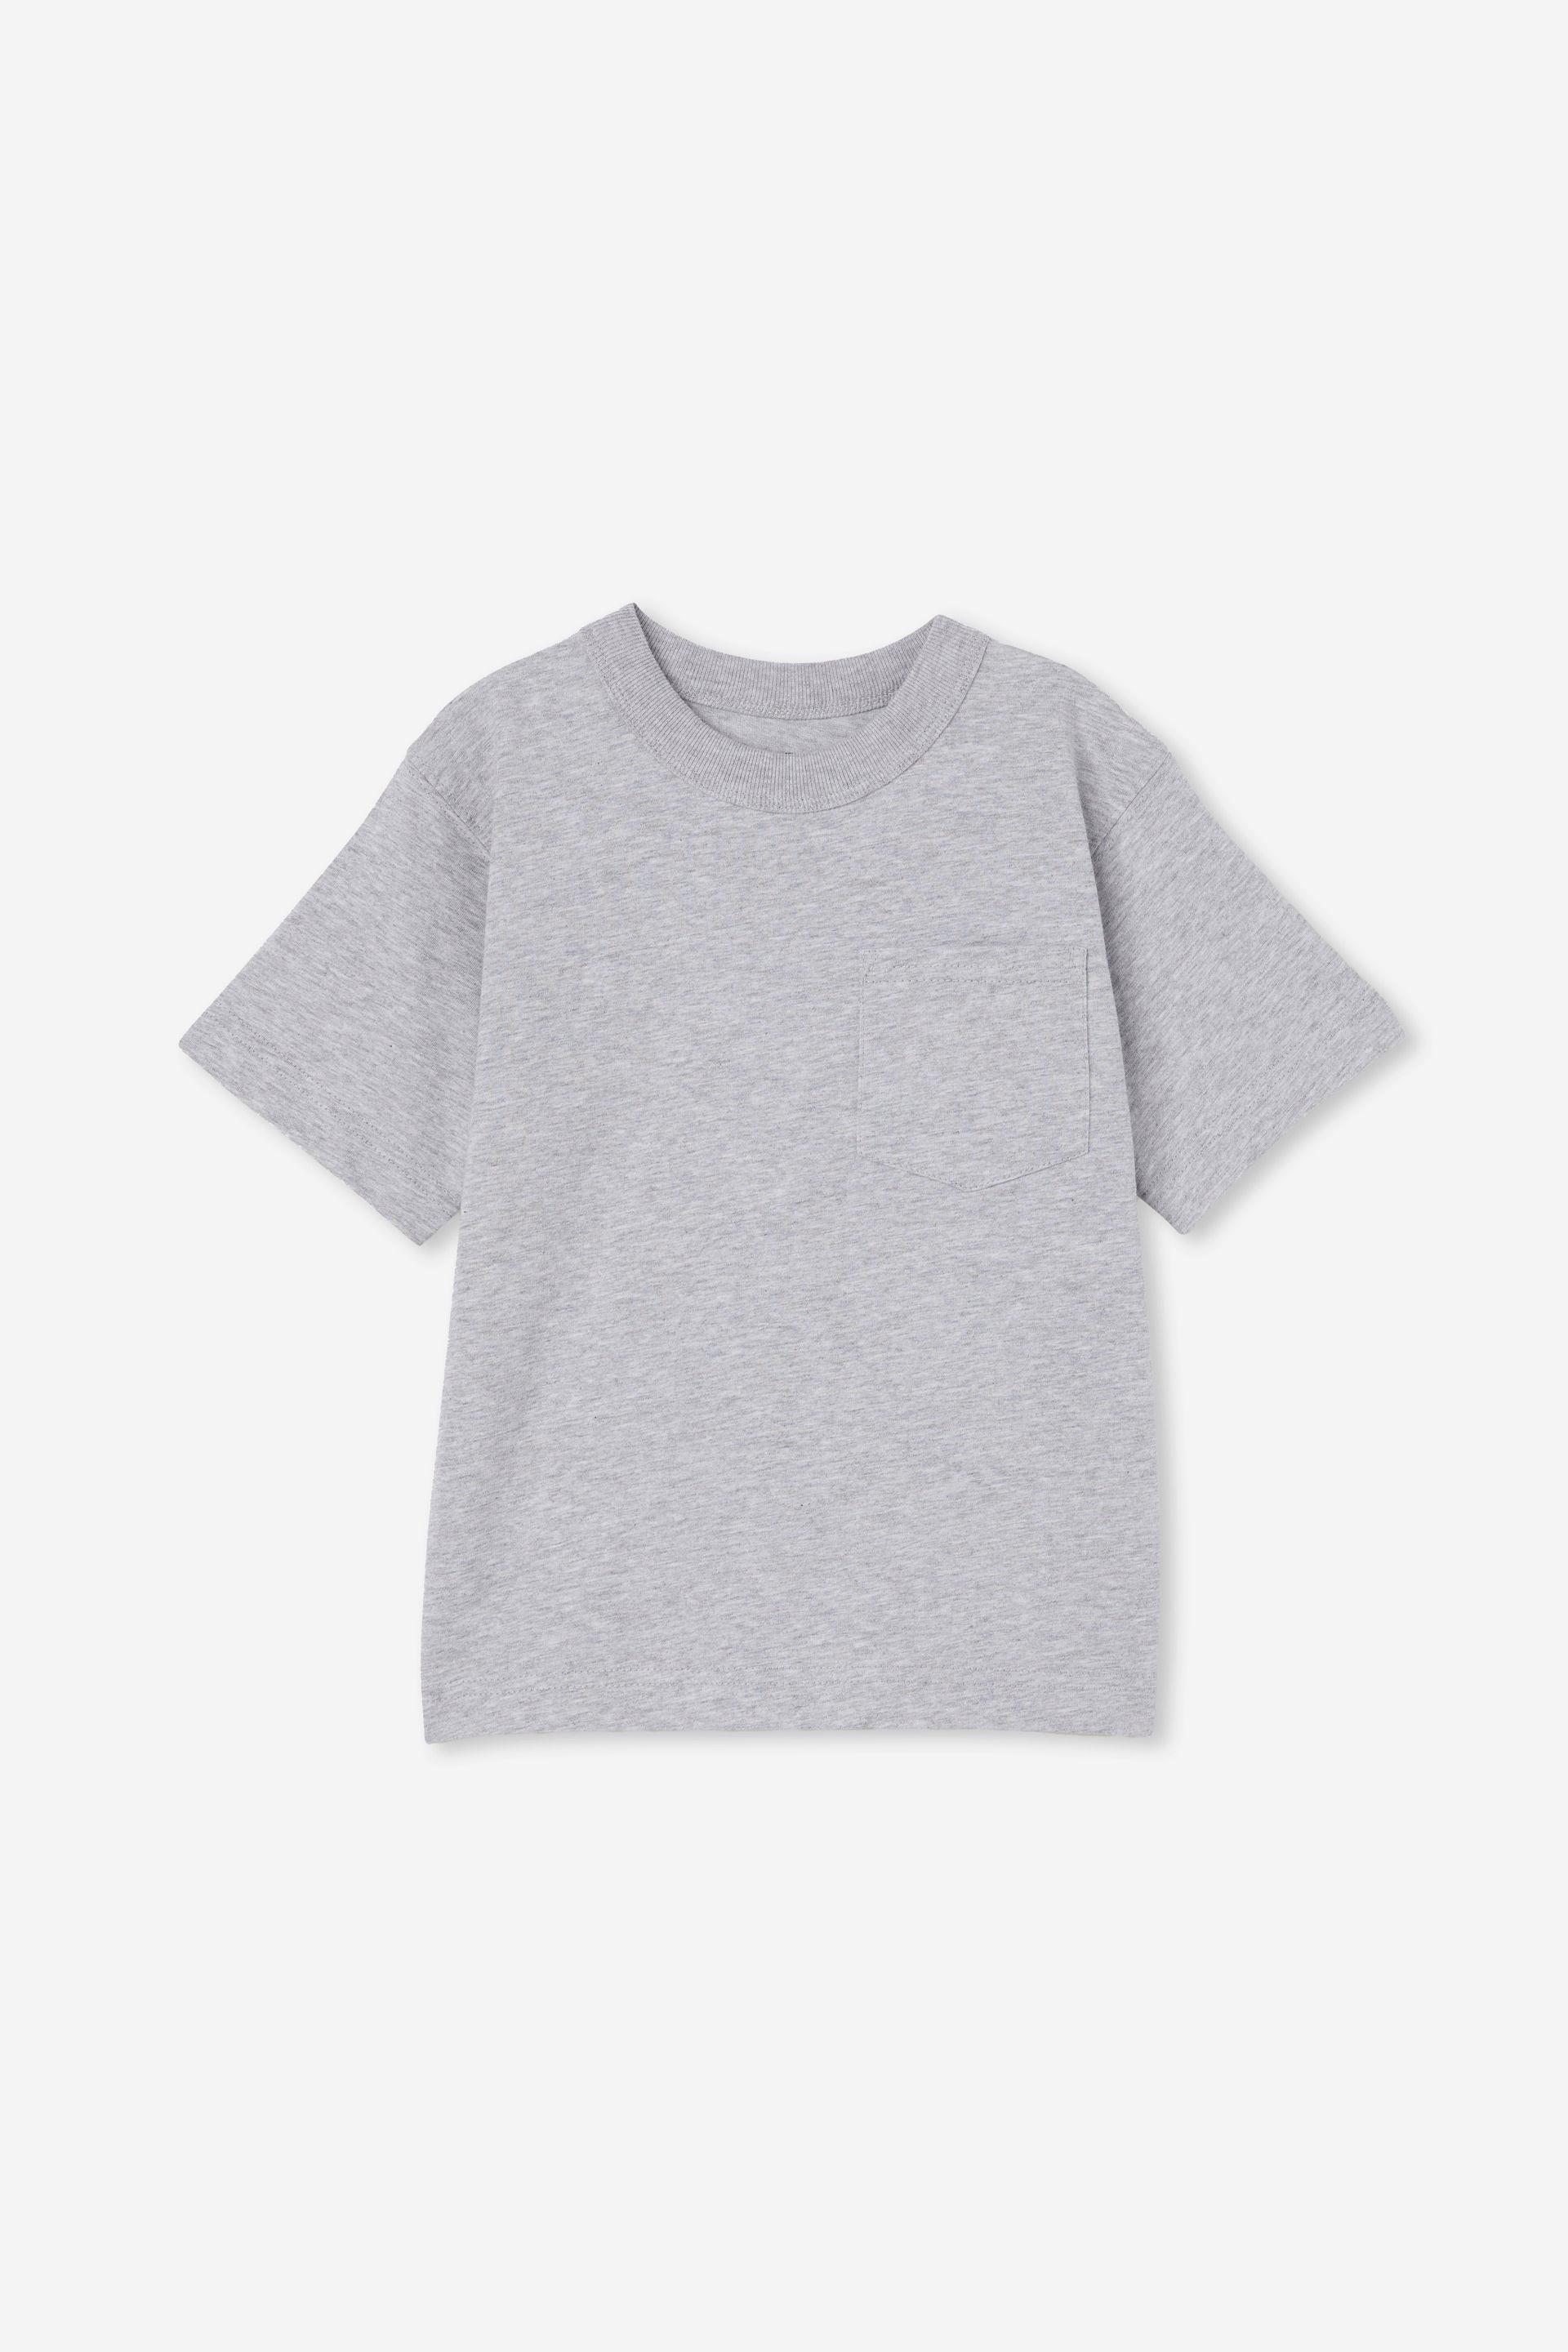 Cotton On Kids - The Essential Short Sleeve Tee - Fog grey marle